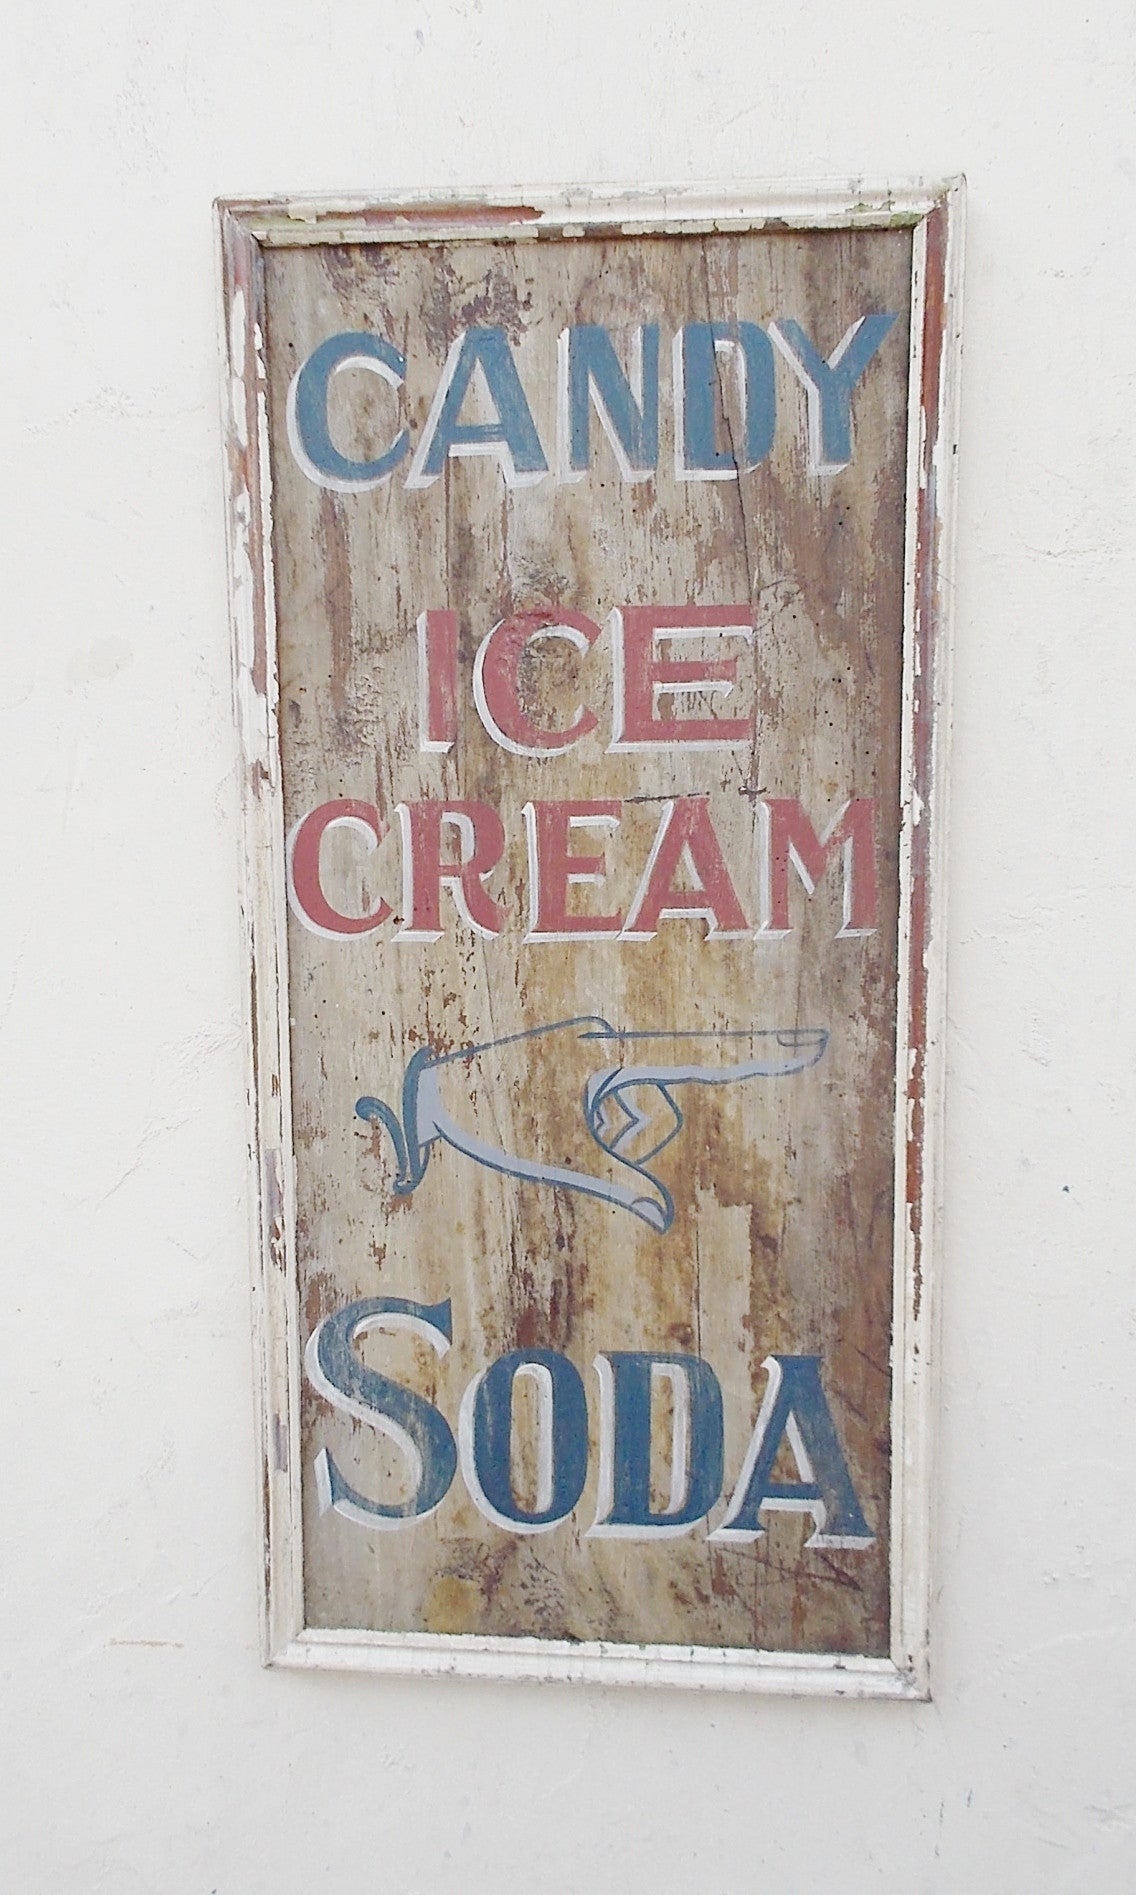 Candy, Ice Cream, Soda